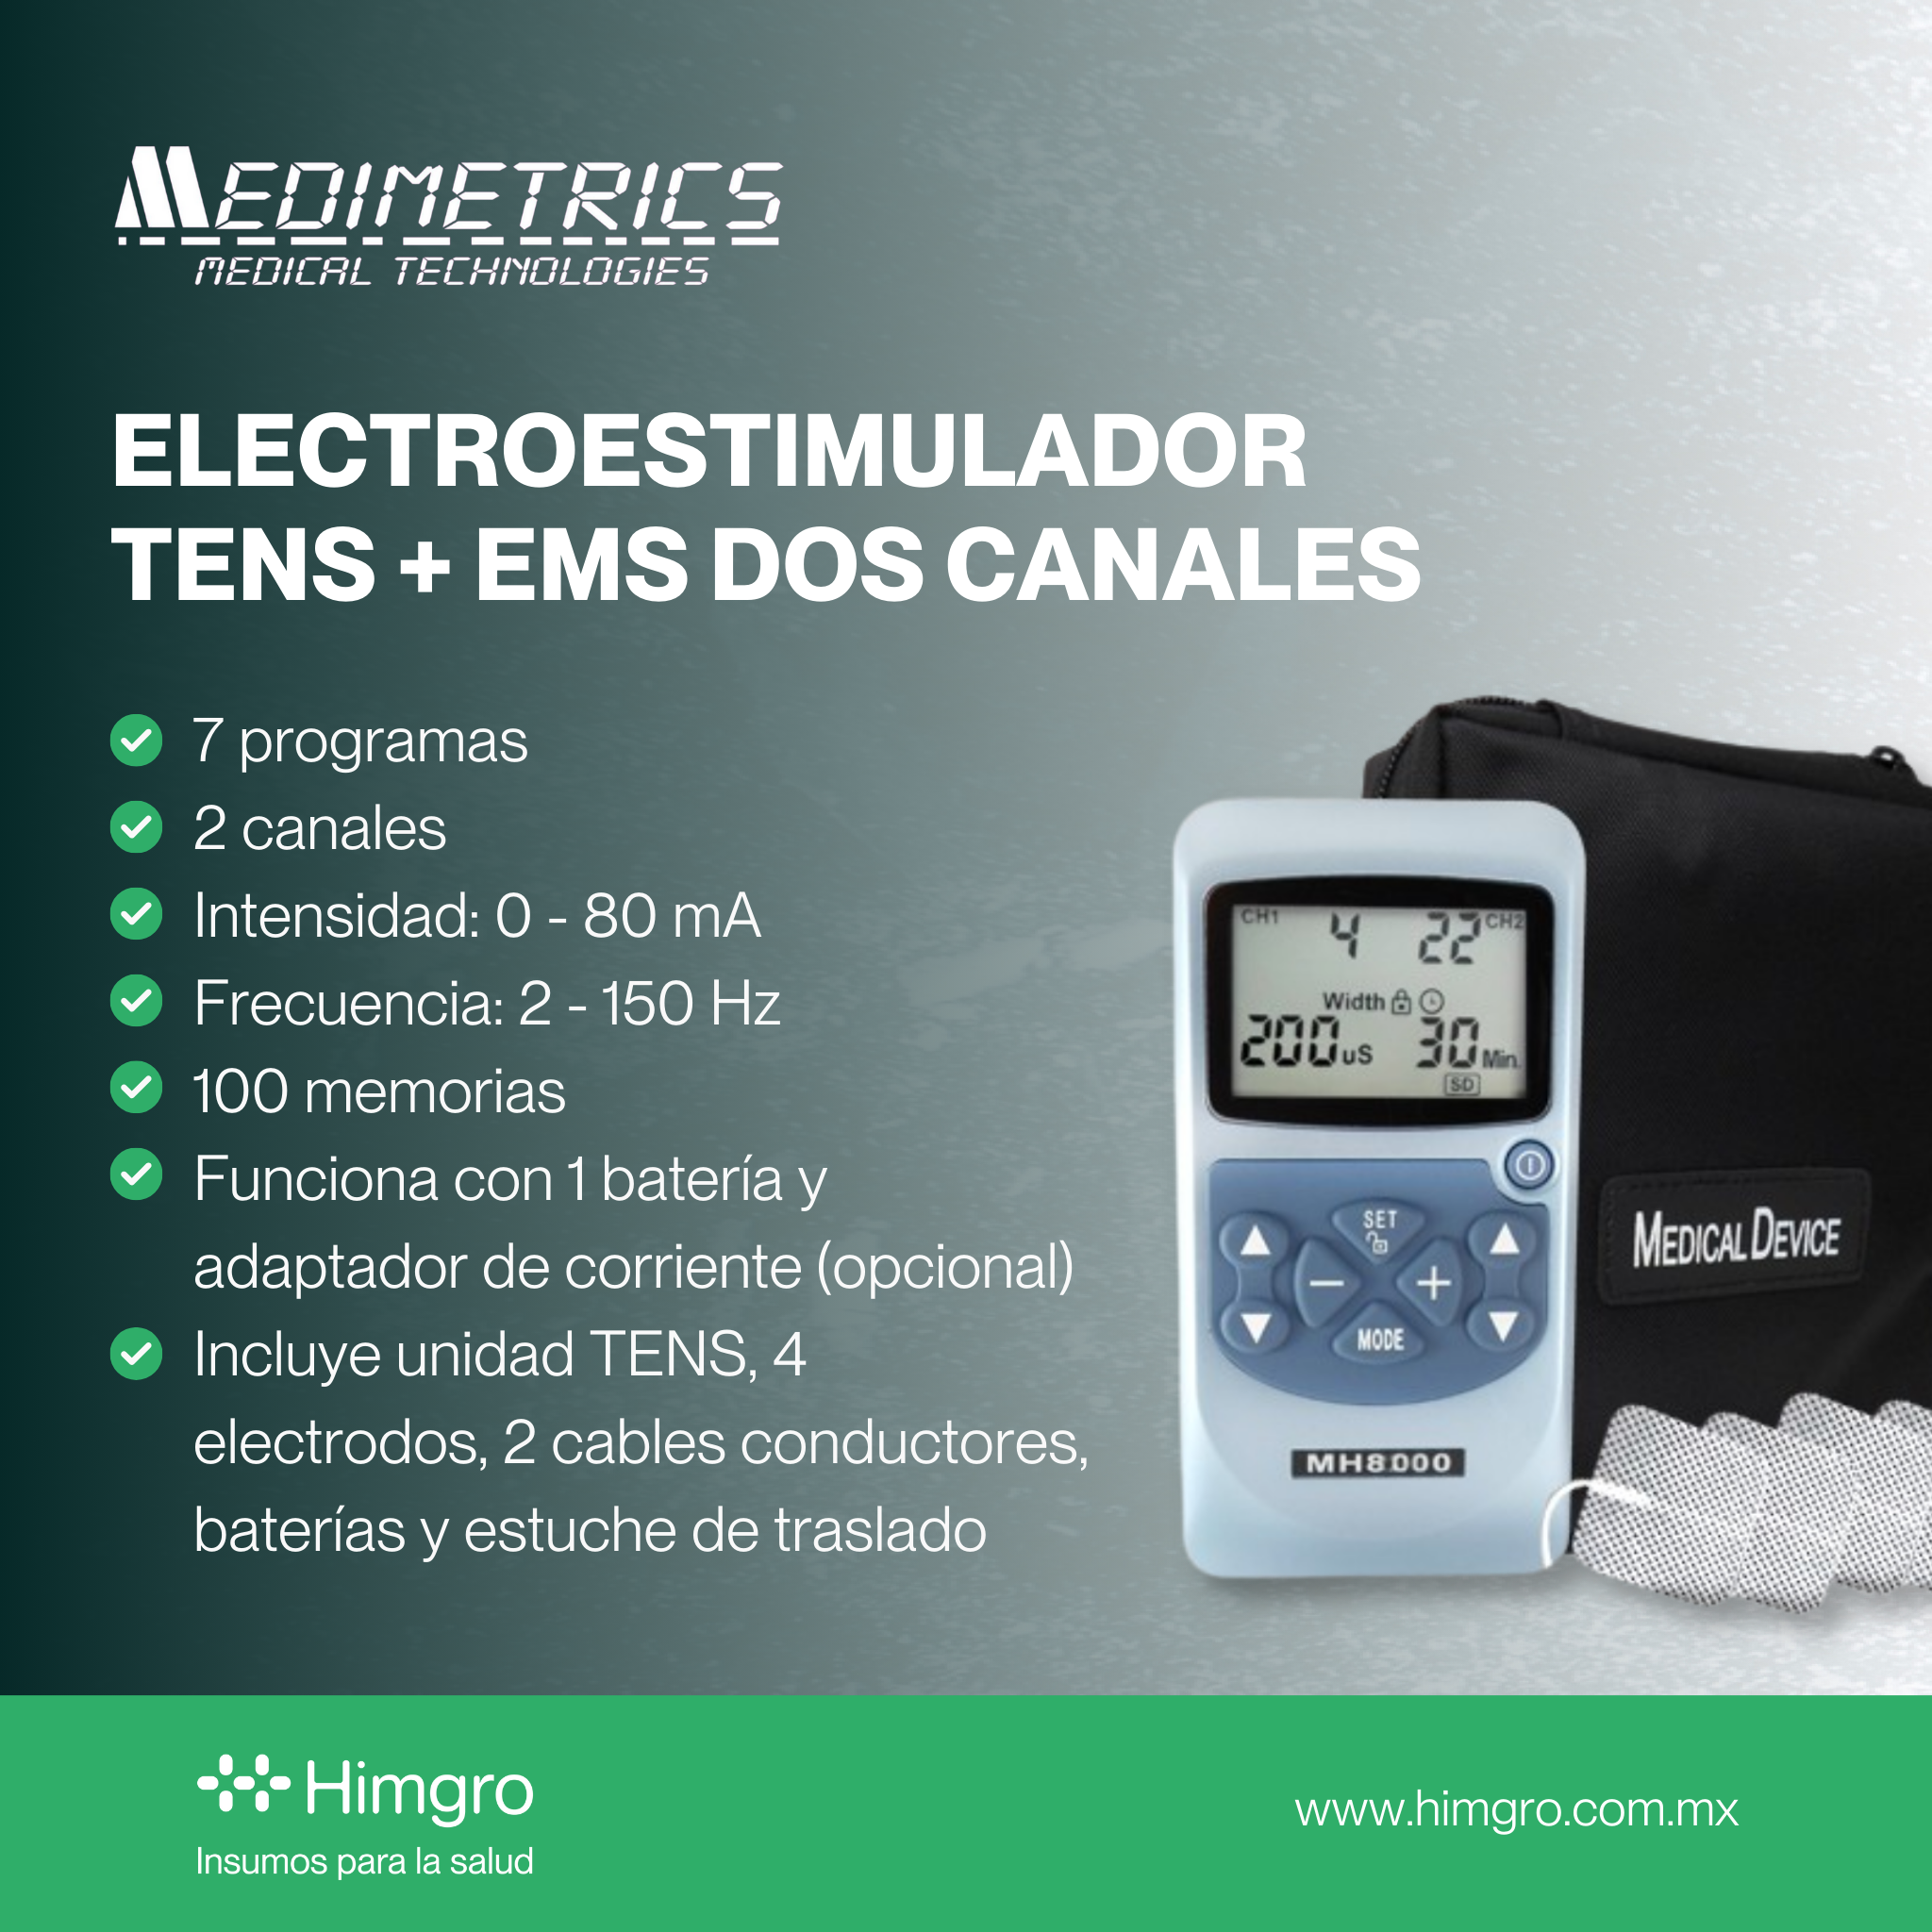 Electroestimulador TENS + EMS dos canales